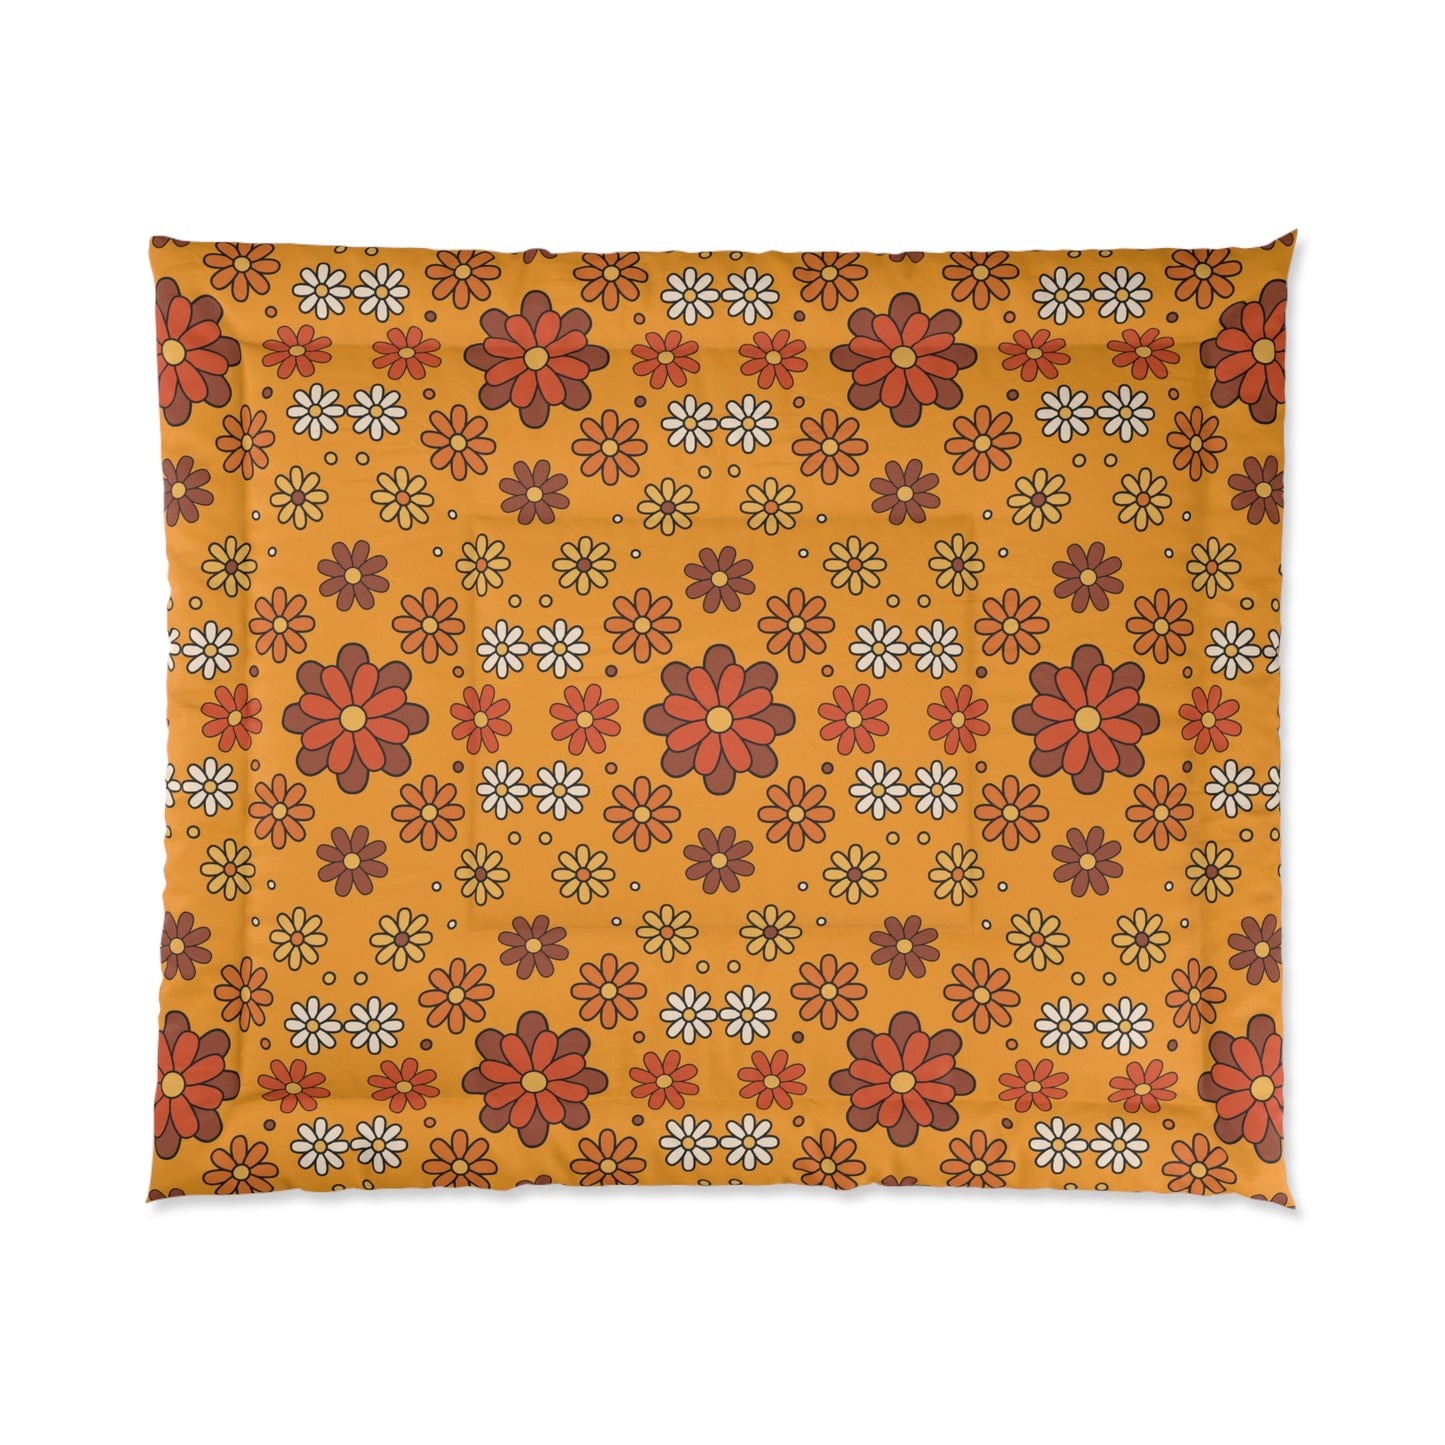 Retro 60s 70s Groovy Mod Daisy Floral Mid Century Orange & Brown Comforter